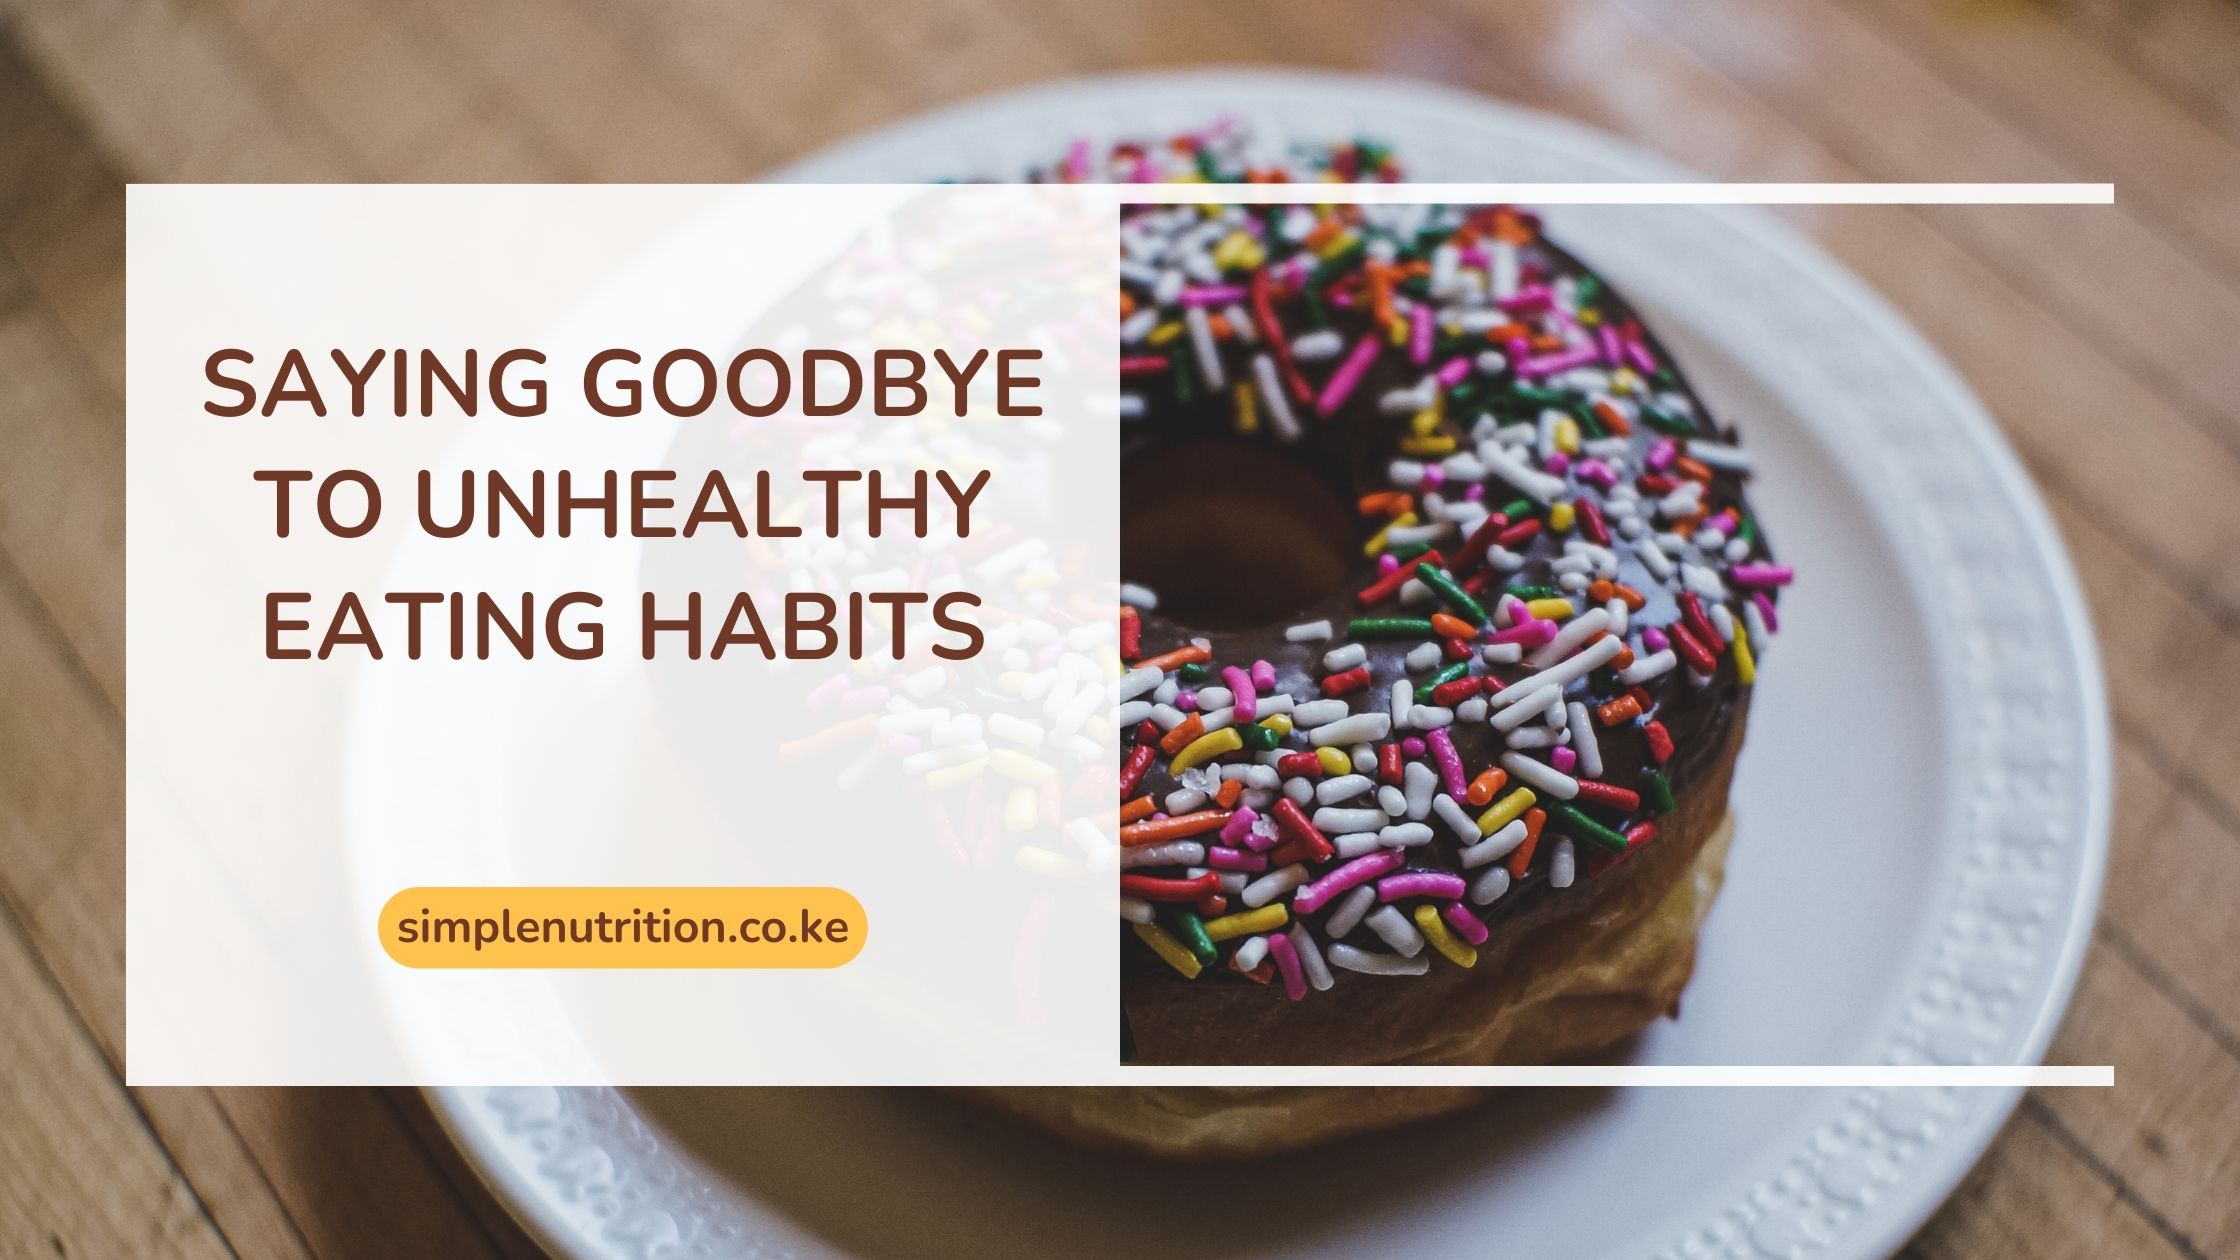 Saying goodbye to unhealthy eating habits